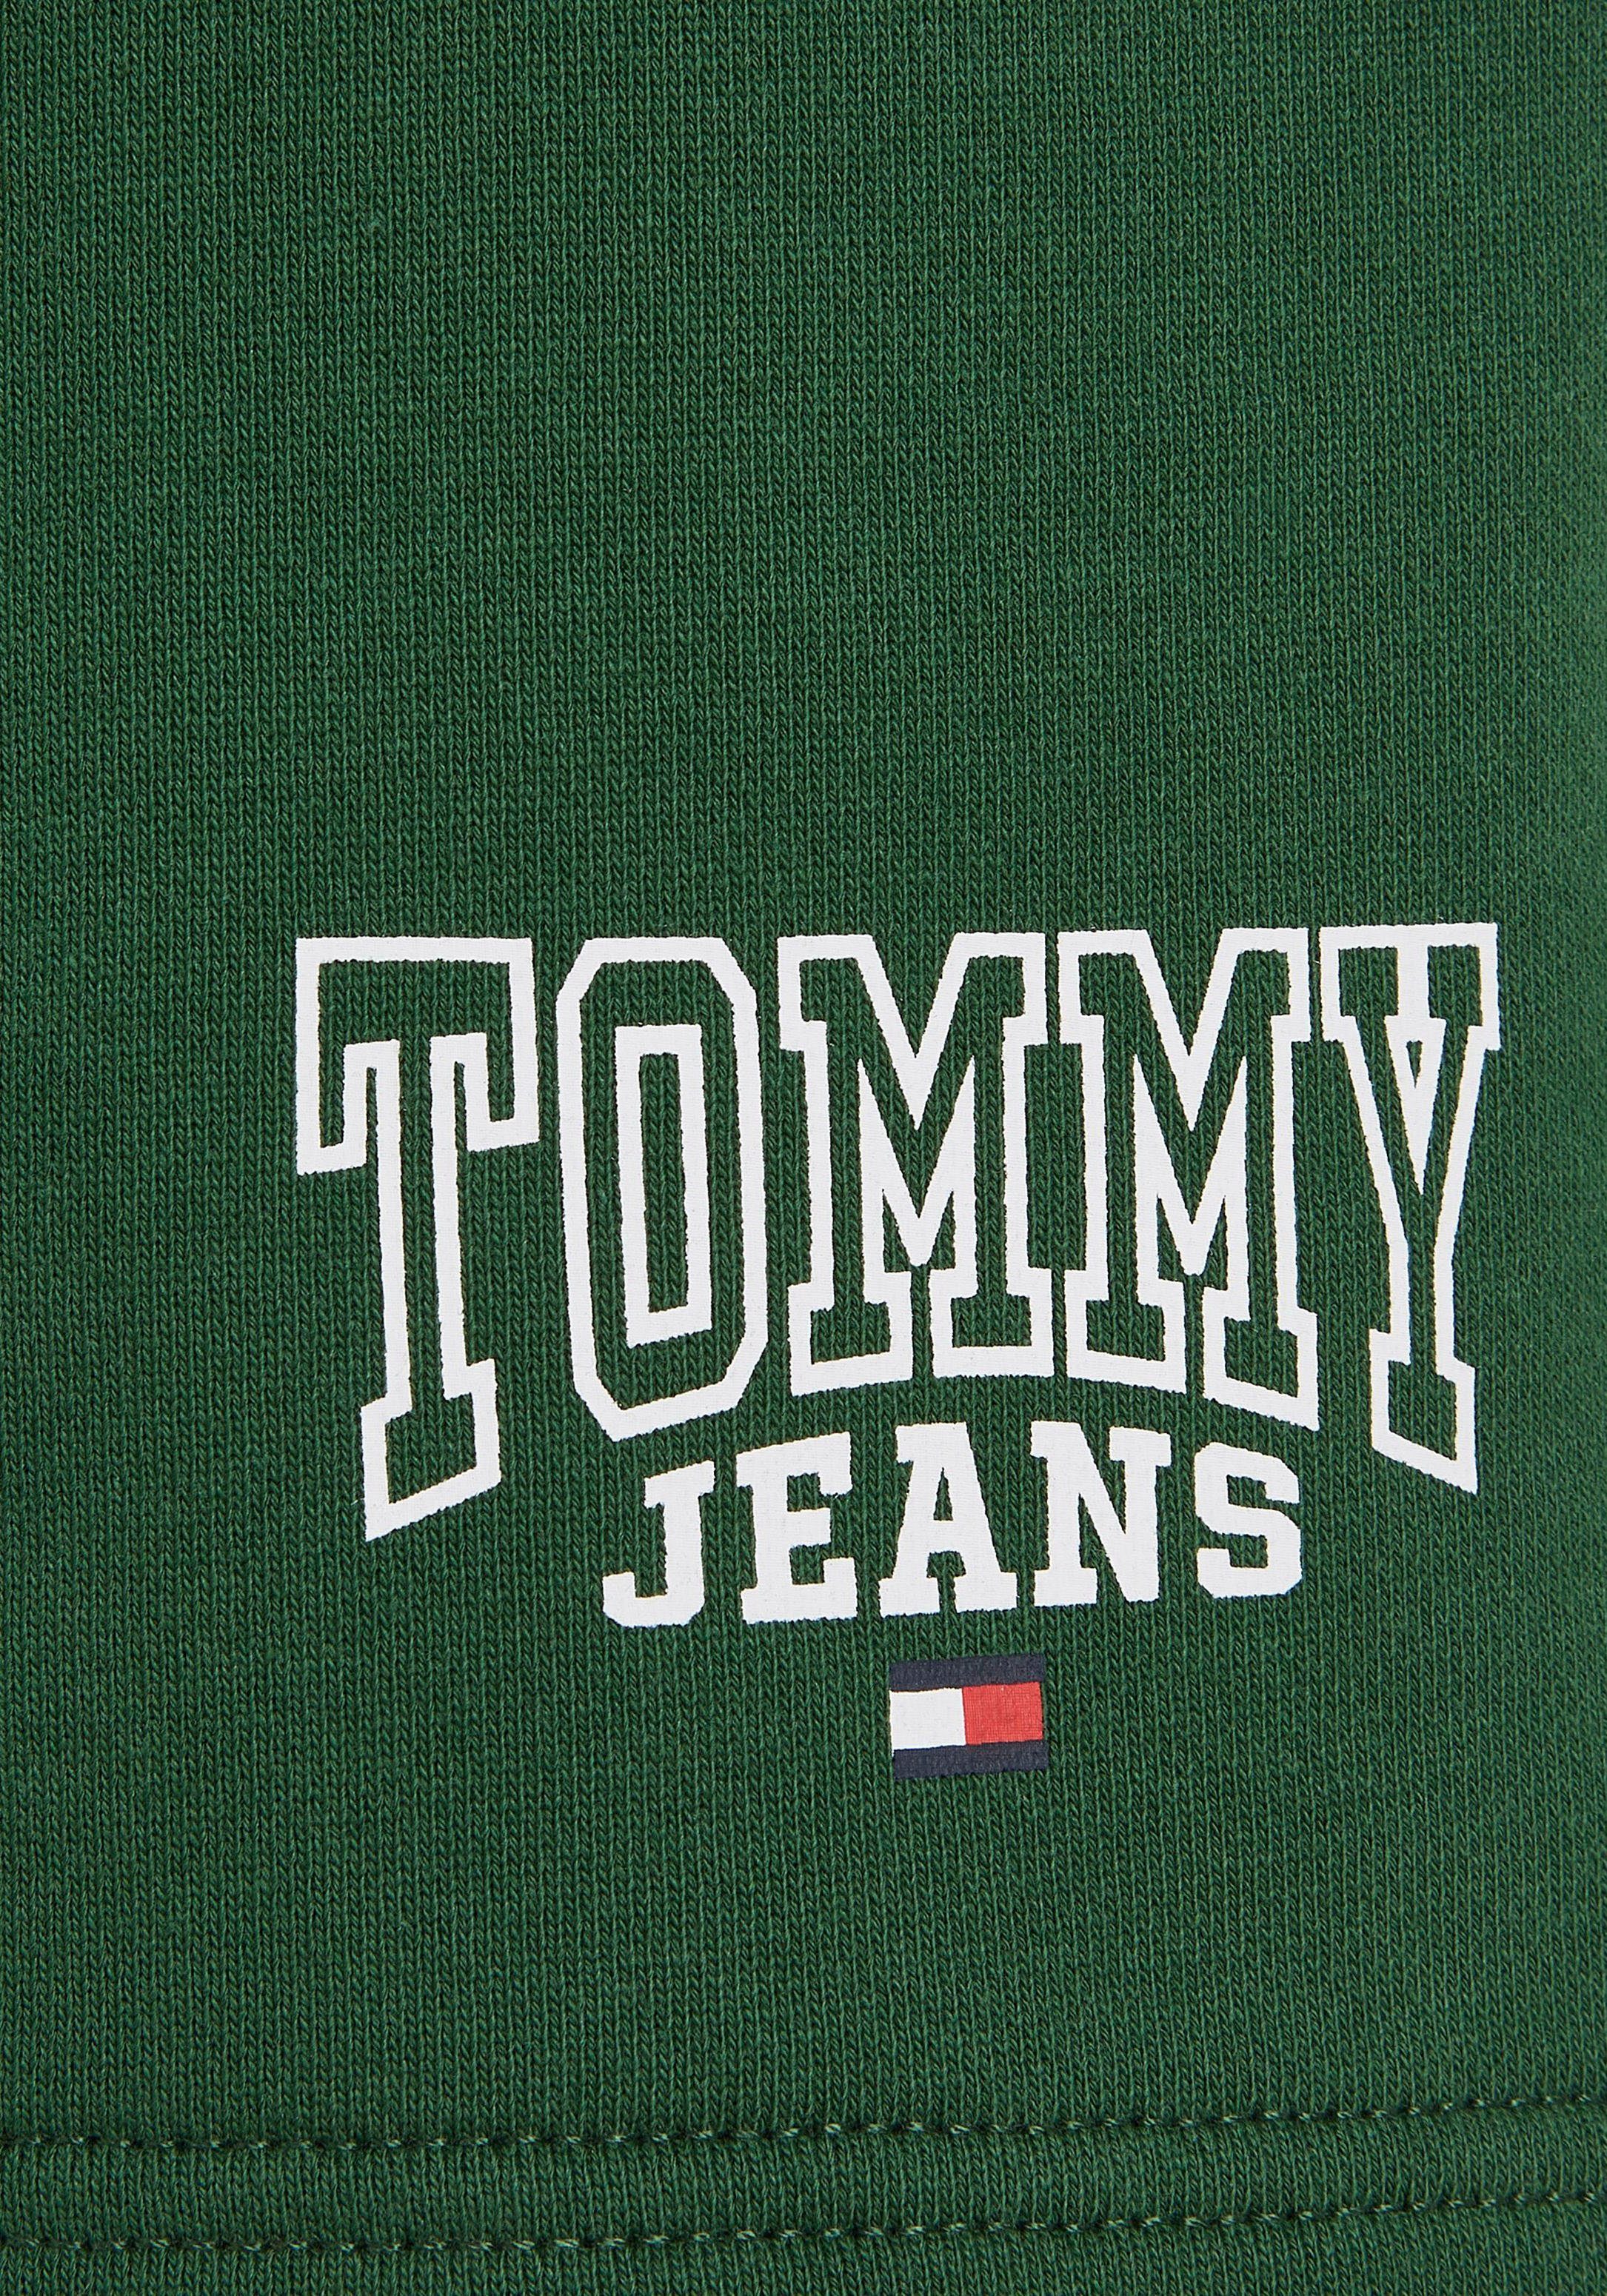 Green Tommy ENTRY PRICE Jeans Sweatshorts BEACH TJM SHORT Collegiate